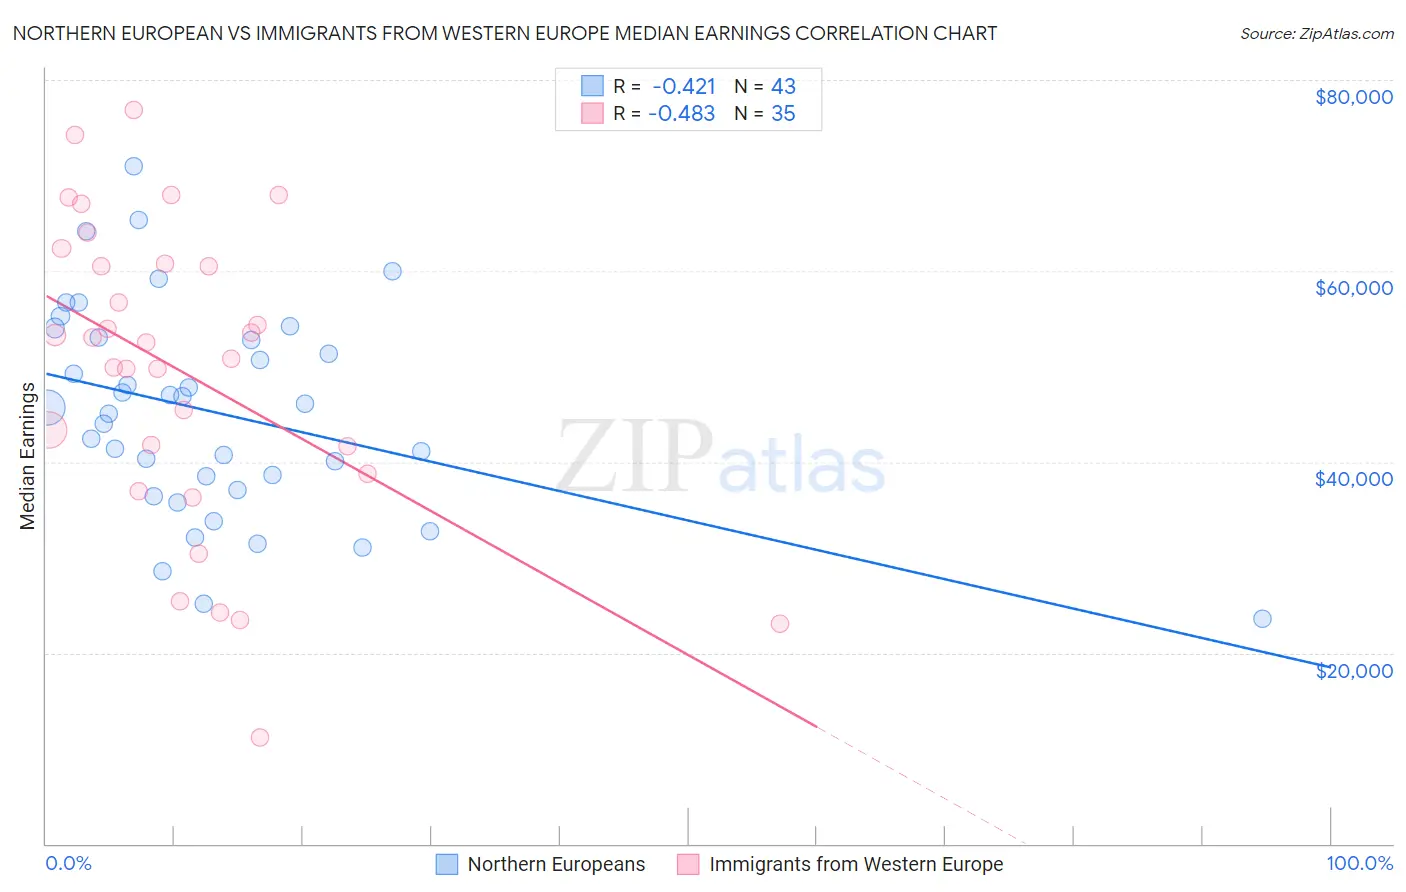 Northern European vs Immigrants from Western Europe Median Earnings